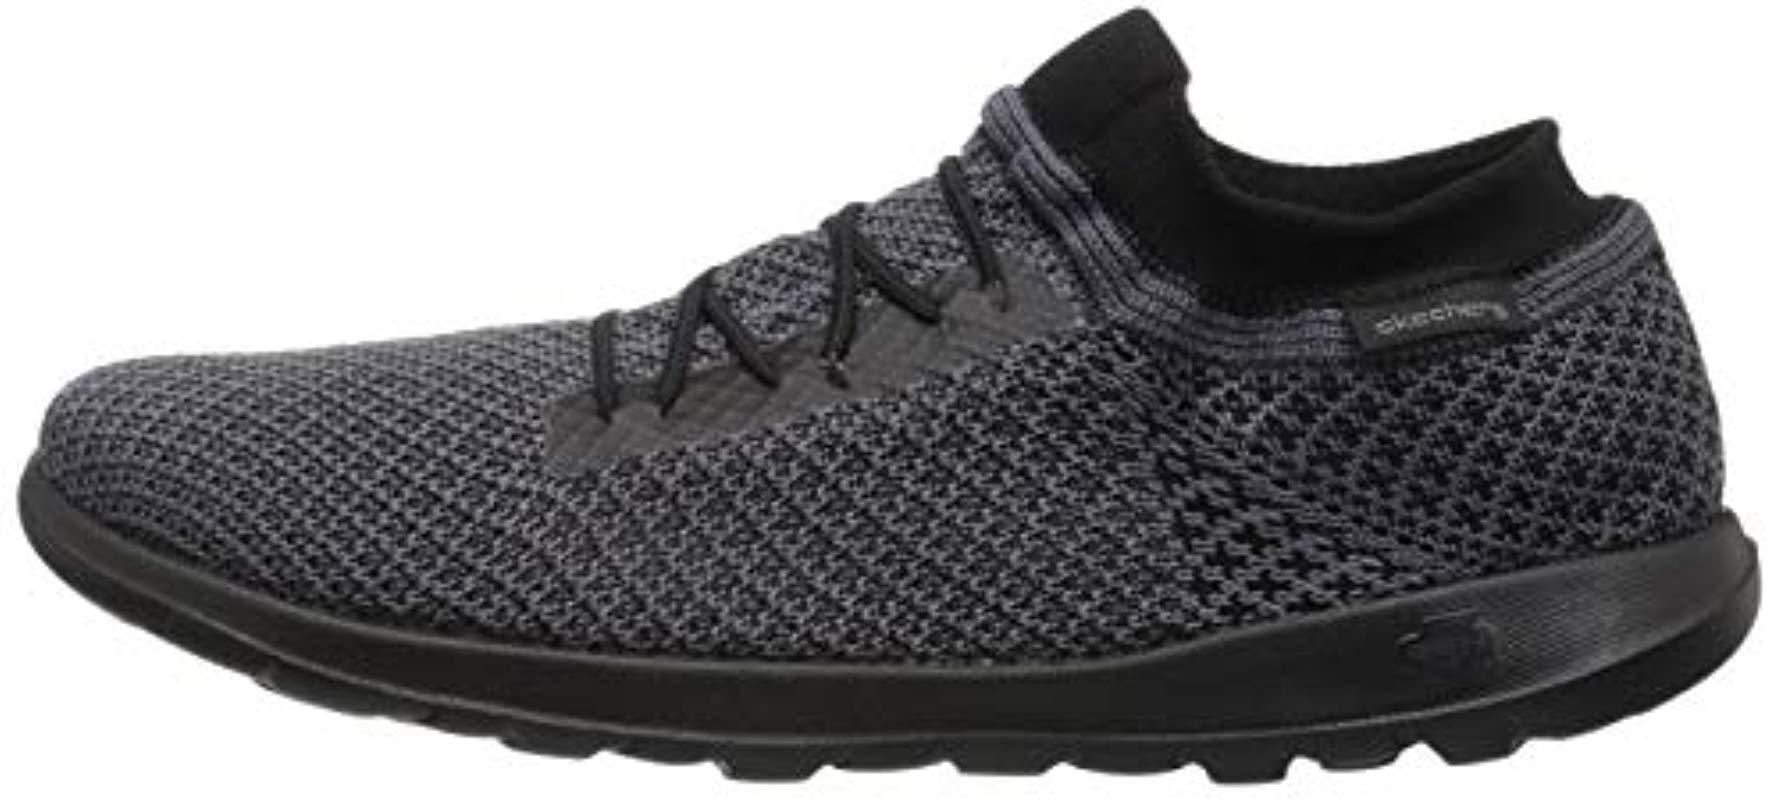 Skechers Performance Go Walk Lite-15374 Sneaker,black/gray,5.5 M Us | Lyst